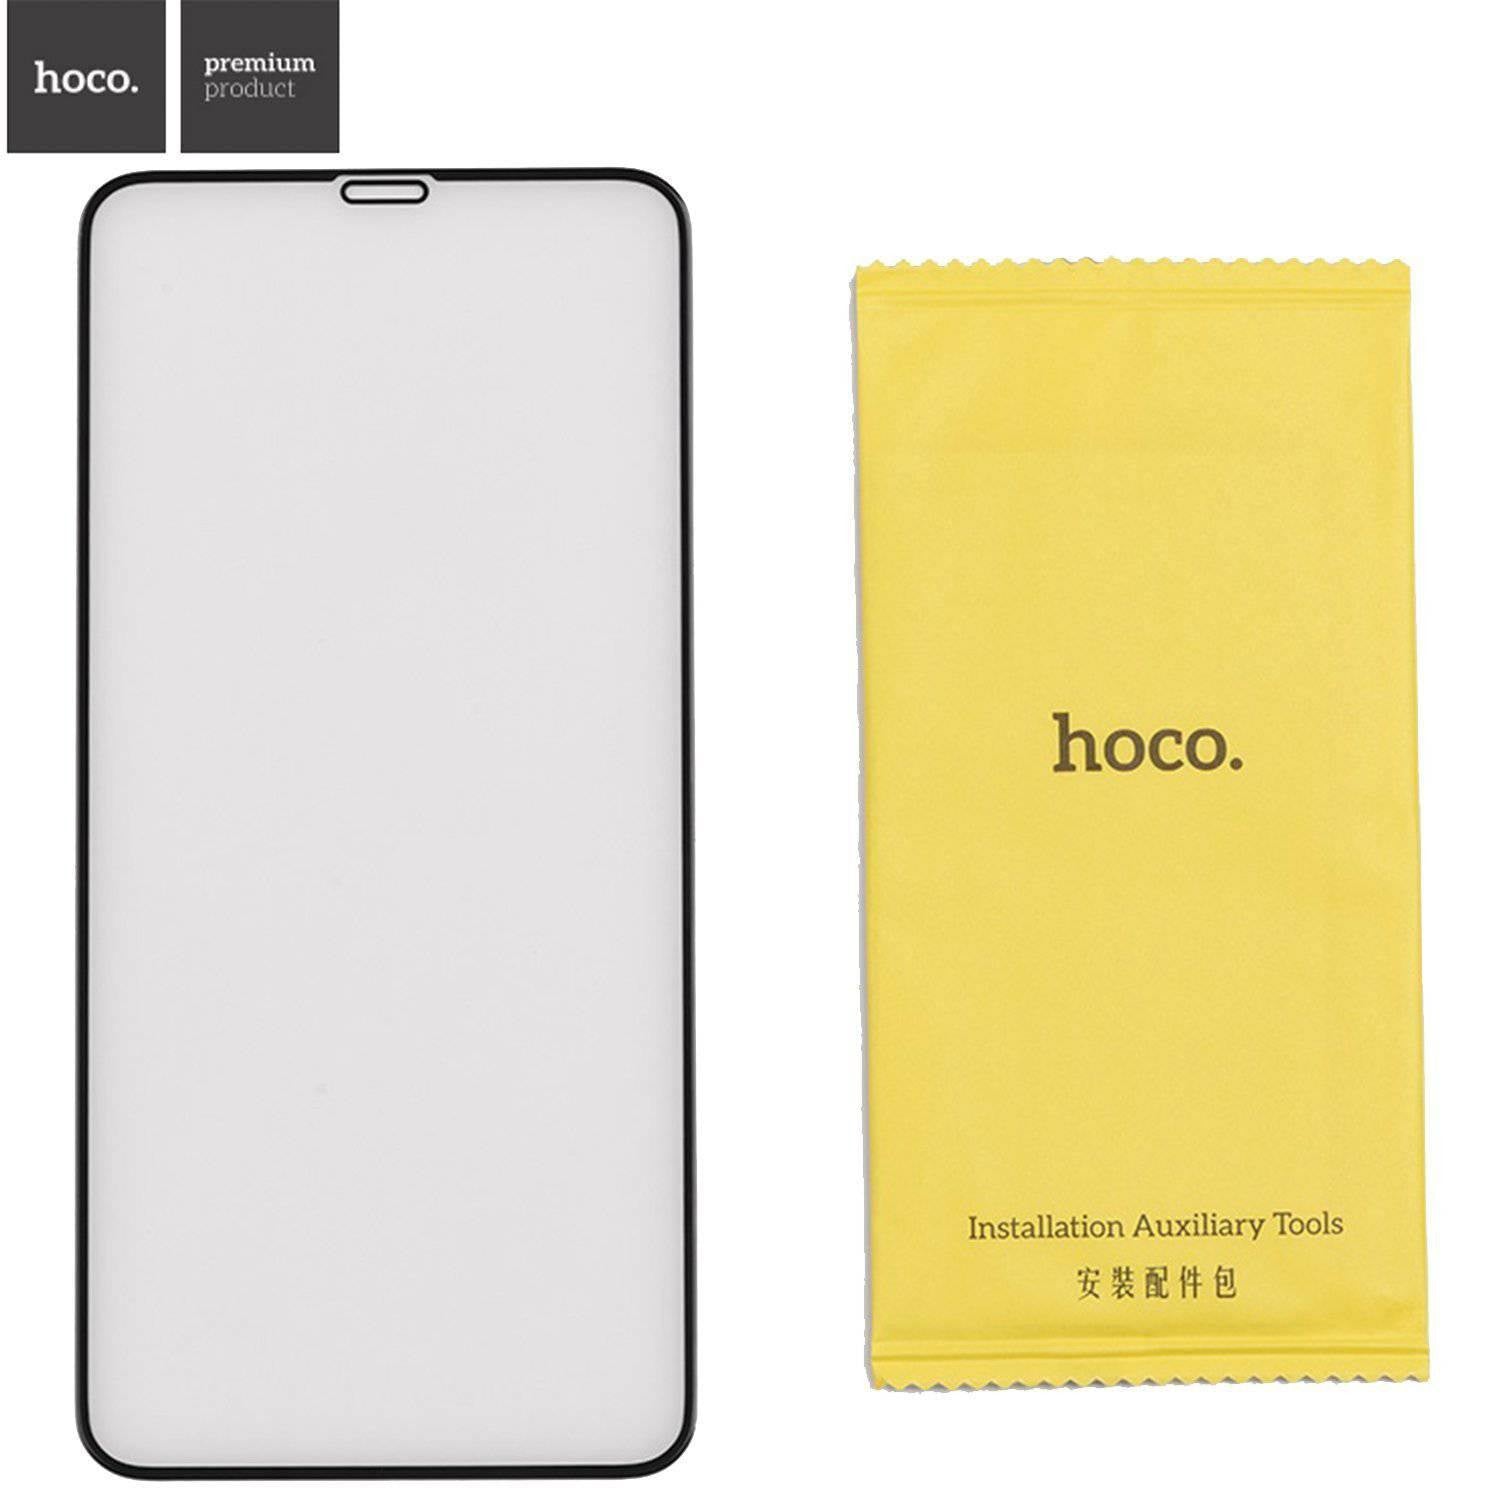 hoco. iPhone XR screen protector | Shopna Online Store .